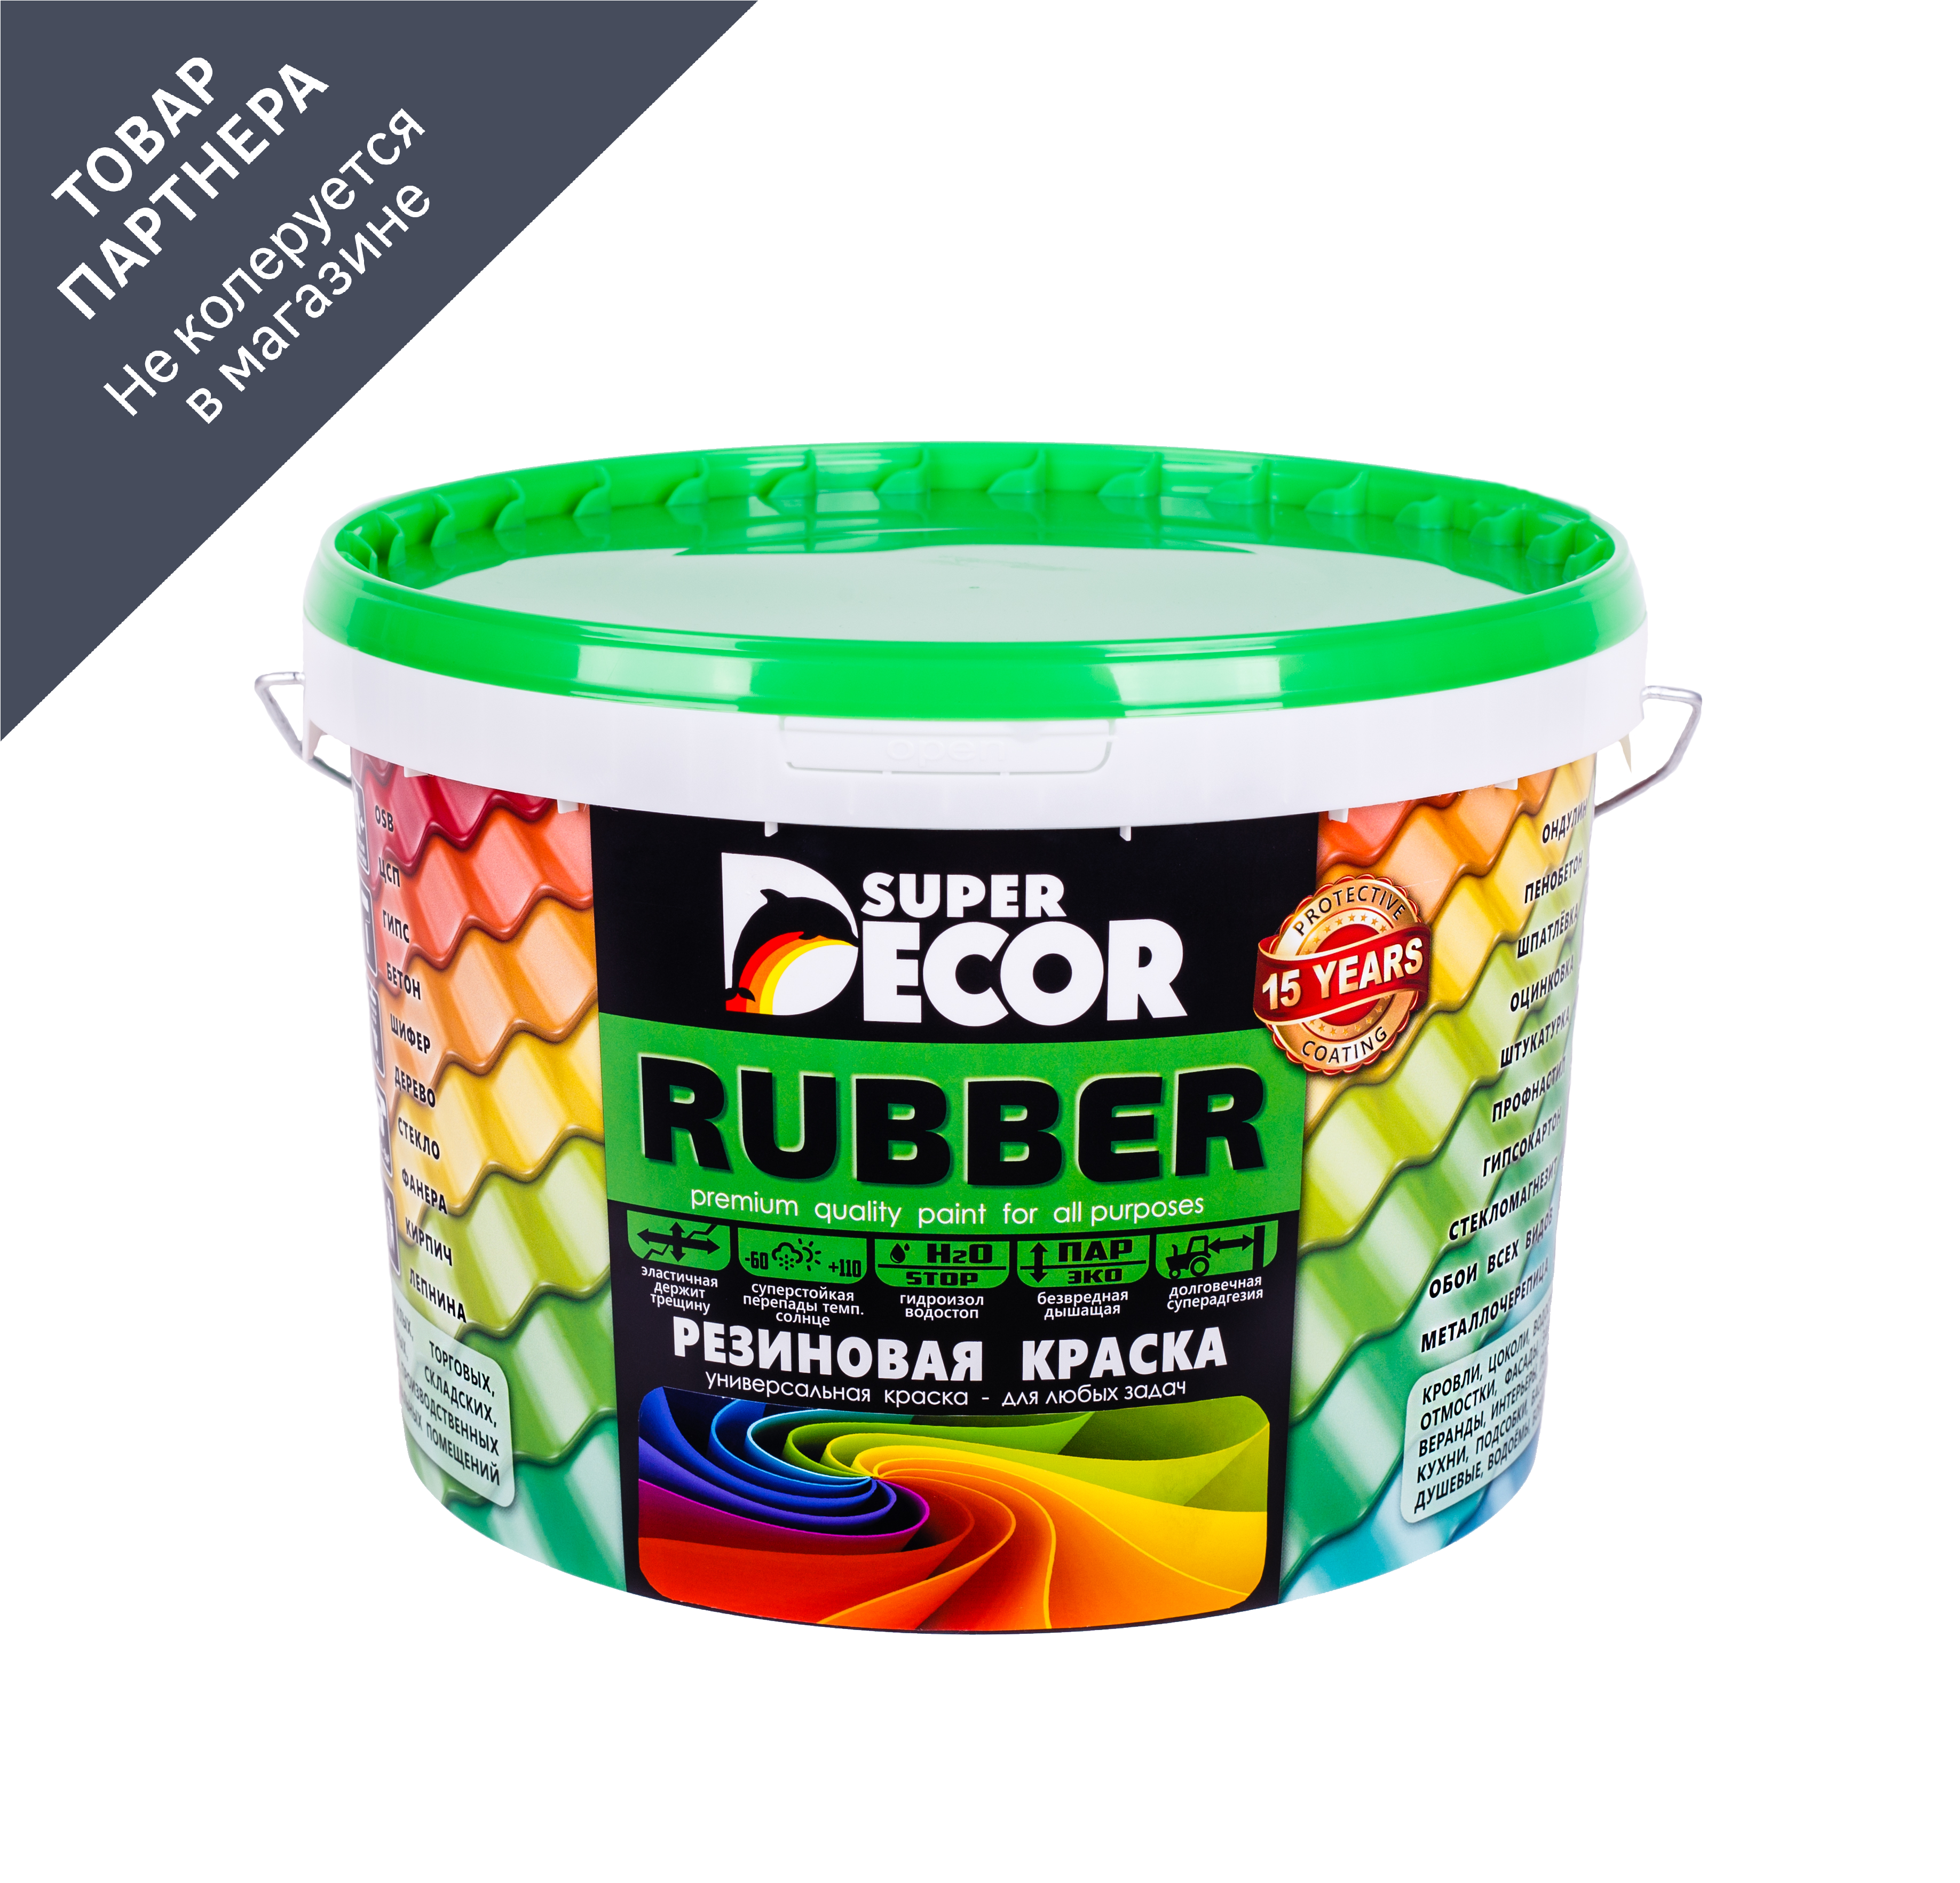 90174470 Краска резиновая Rubber цвет № 4 Дикая вишня 3 кг STLM-0123532 SUPER DECOR